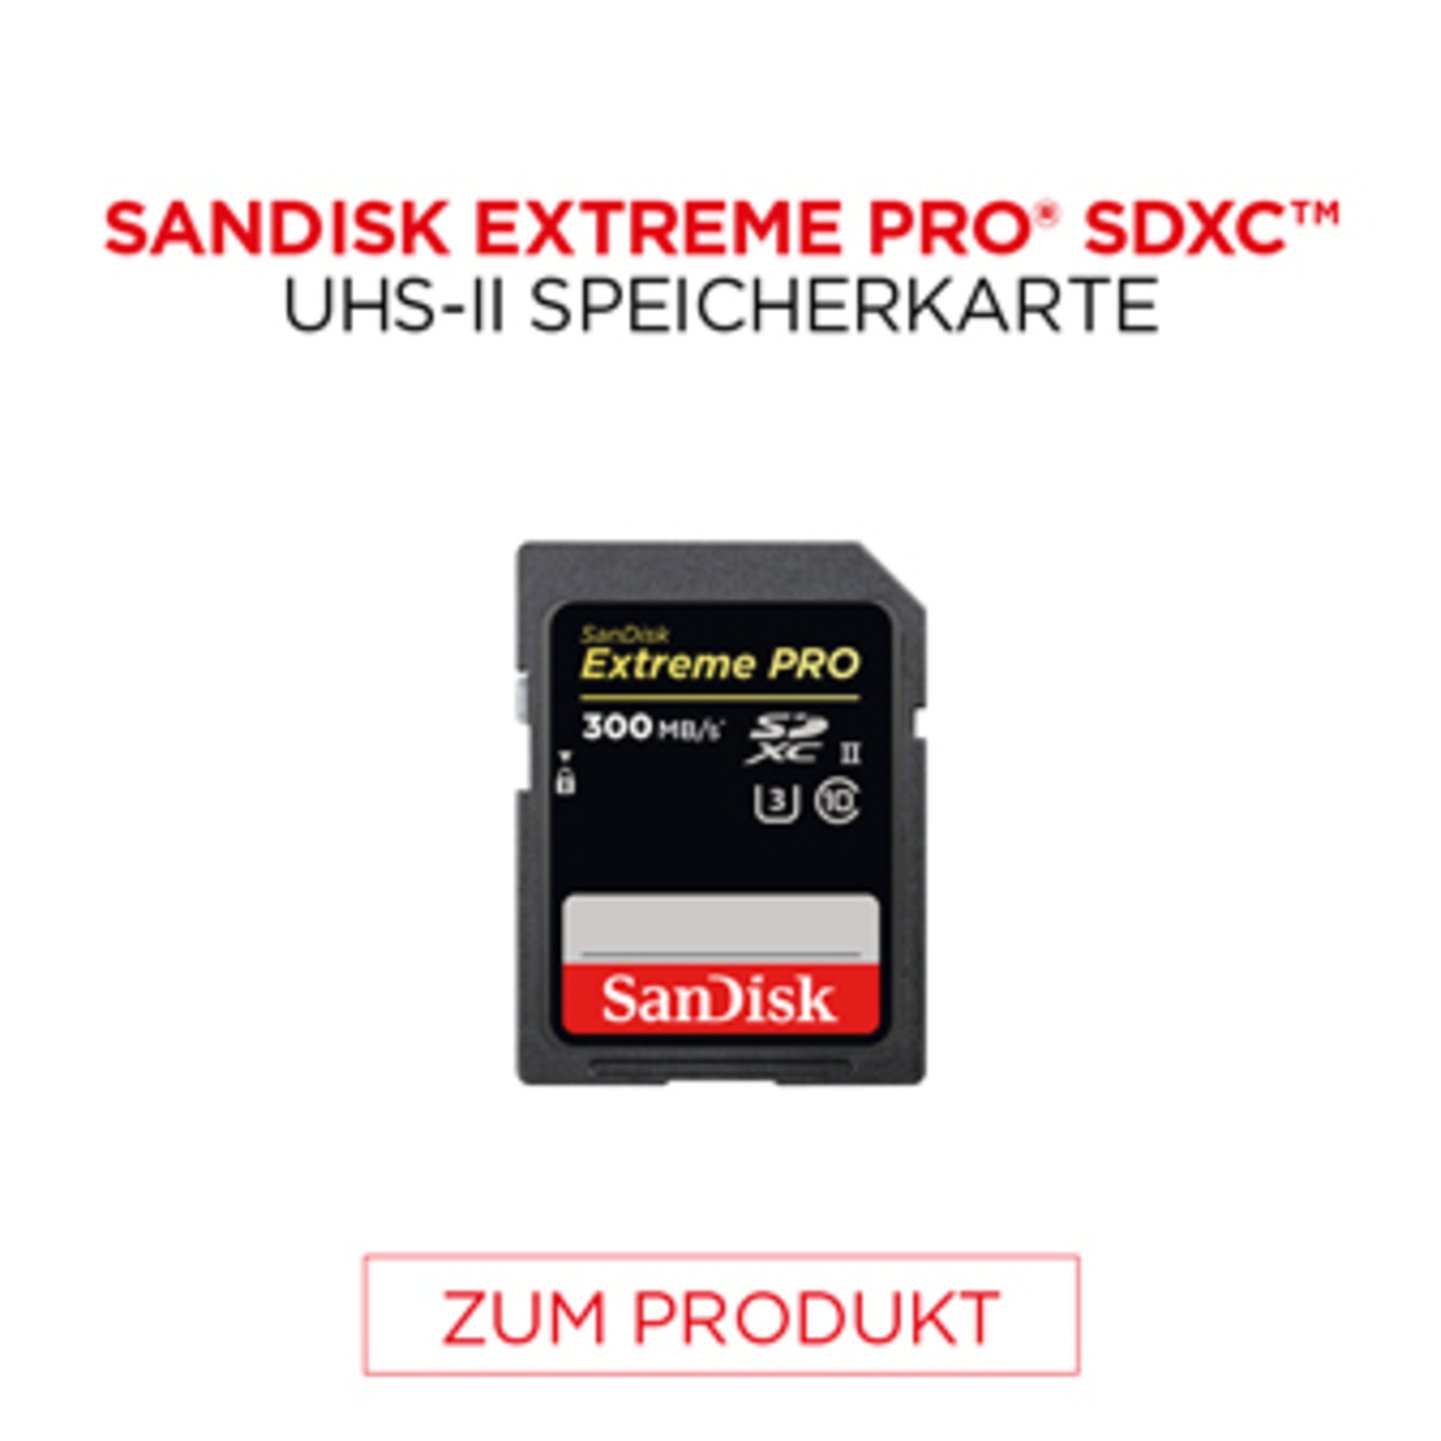 Sandisk Extreme Pro SDXC UHS Speicherkarte